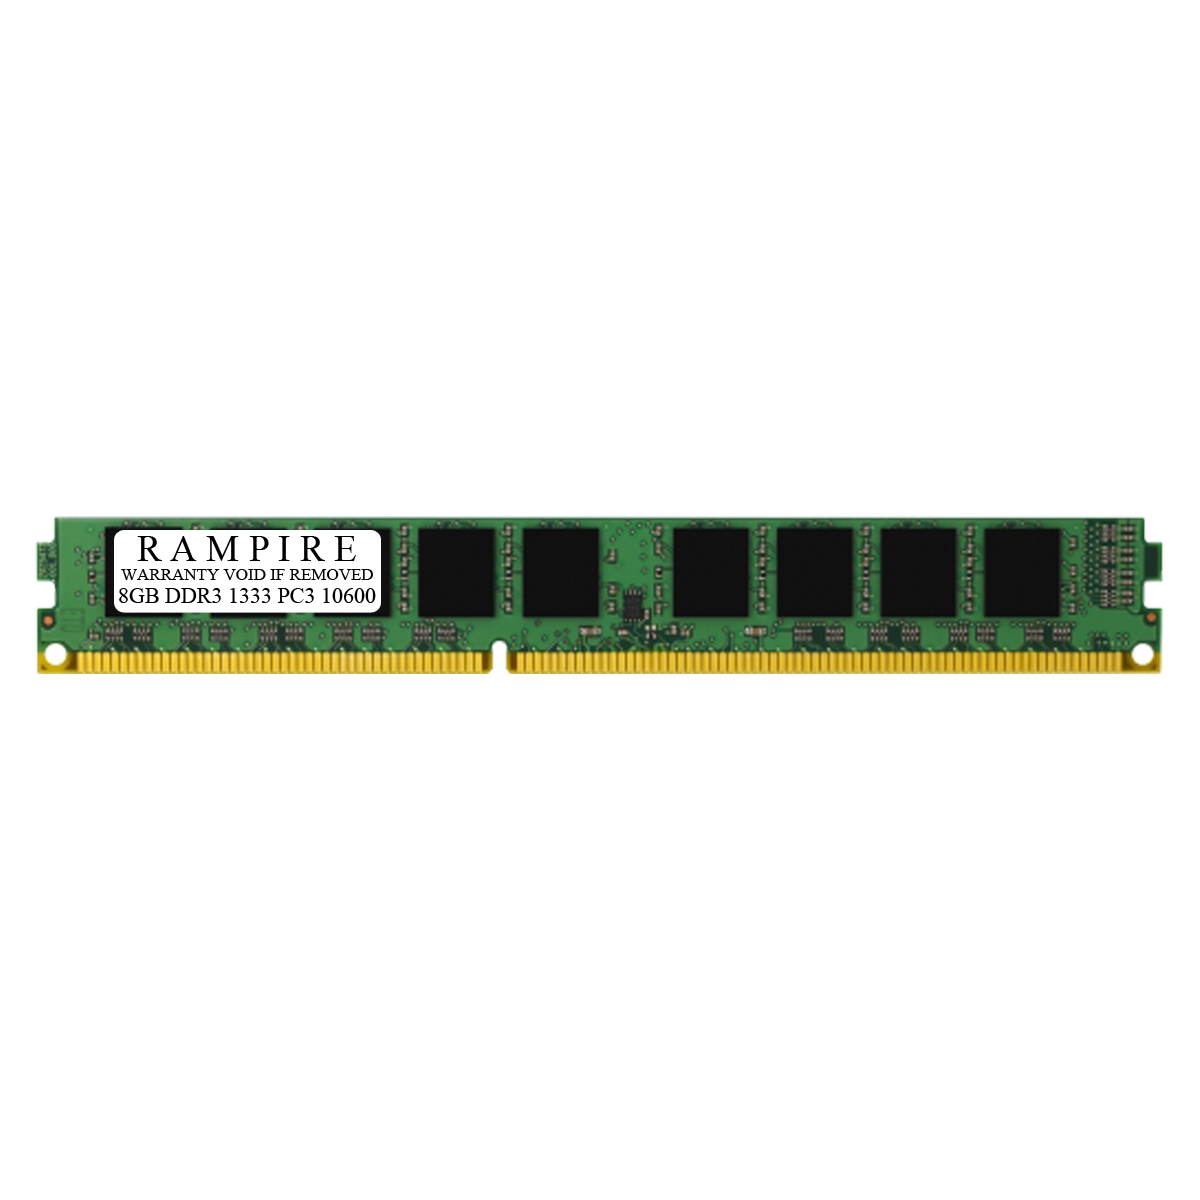 RAMPIRE 8GB DDR3 1333 (PC3 10600) 240-Pin SDRAM 2Rx8 VLP (Low Profile) 1.5V ECC Unregistered Server Memory